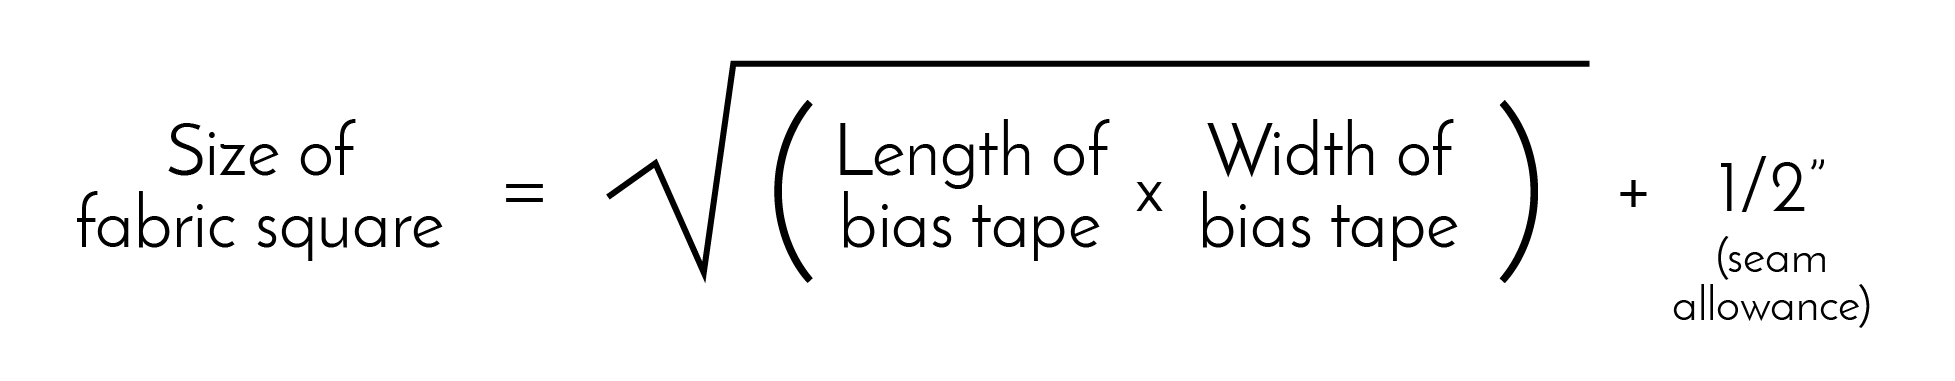 Standard continuous bias tape formula